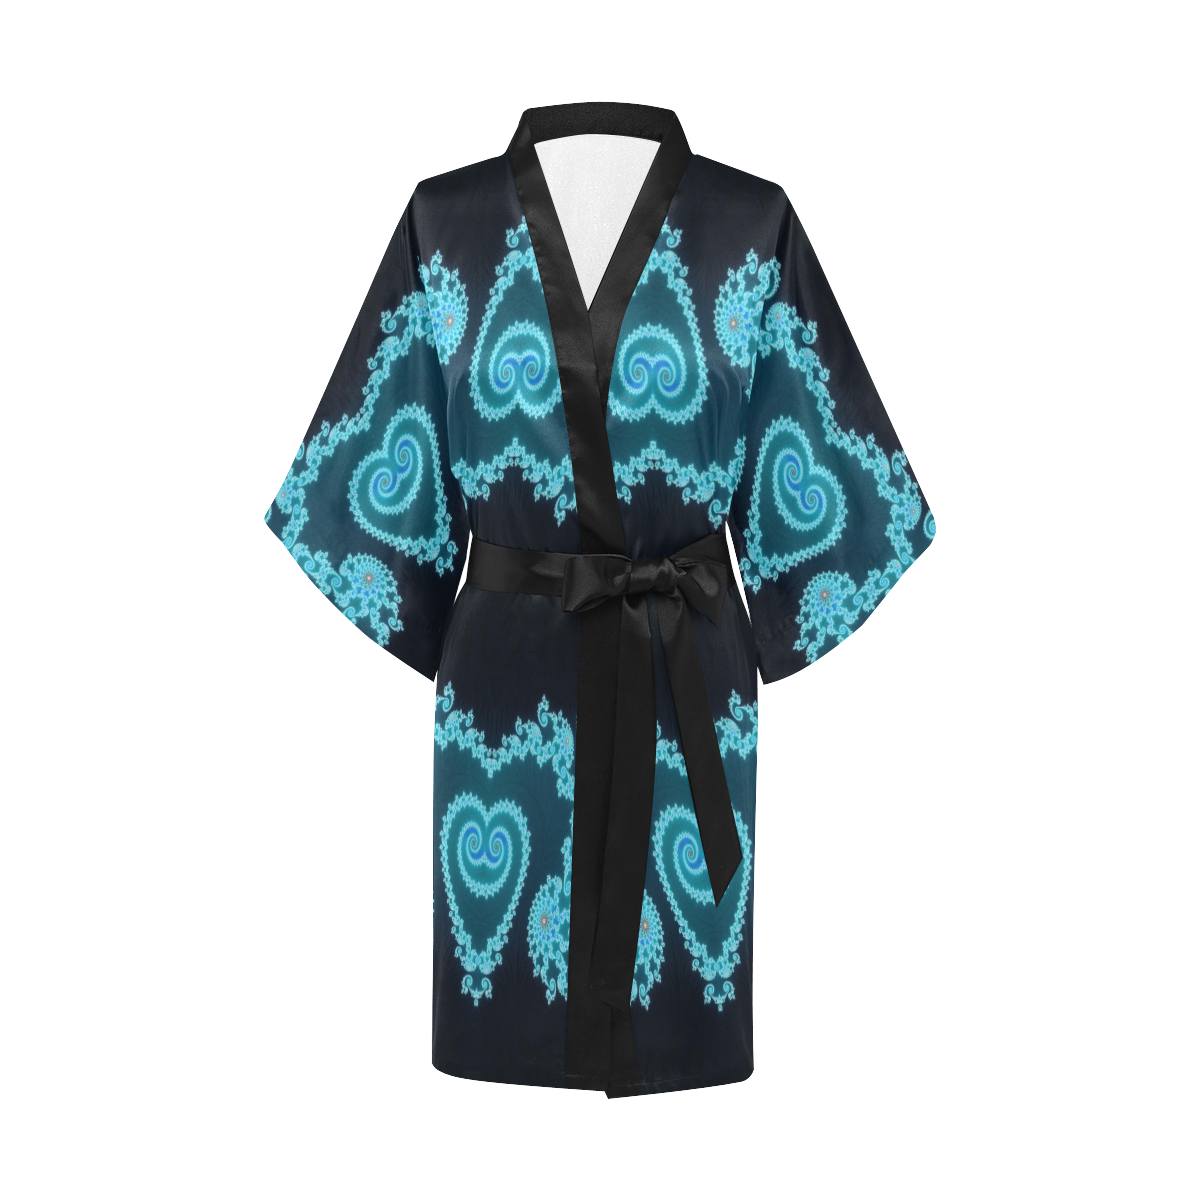 Sky Blue and Black Hearts Lace Fractal Abstract Kimono Robe